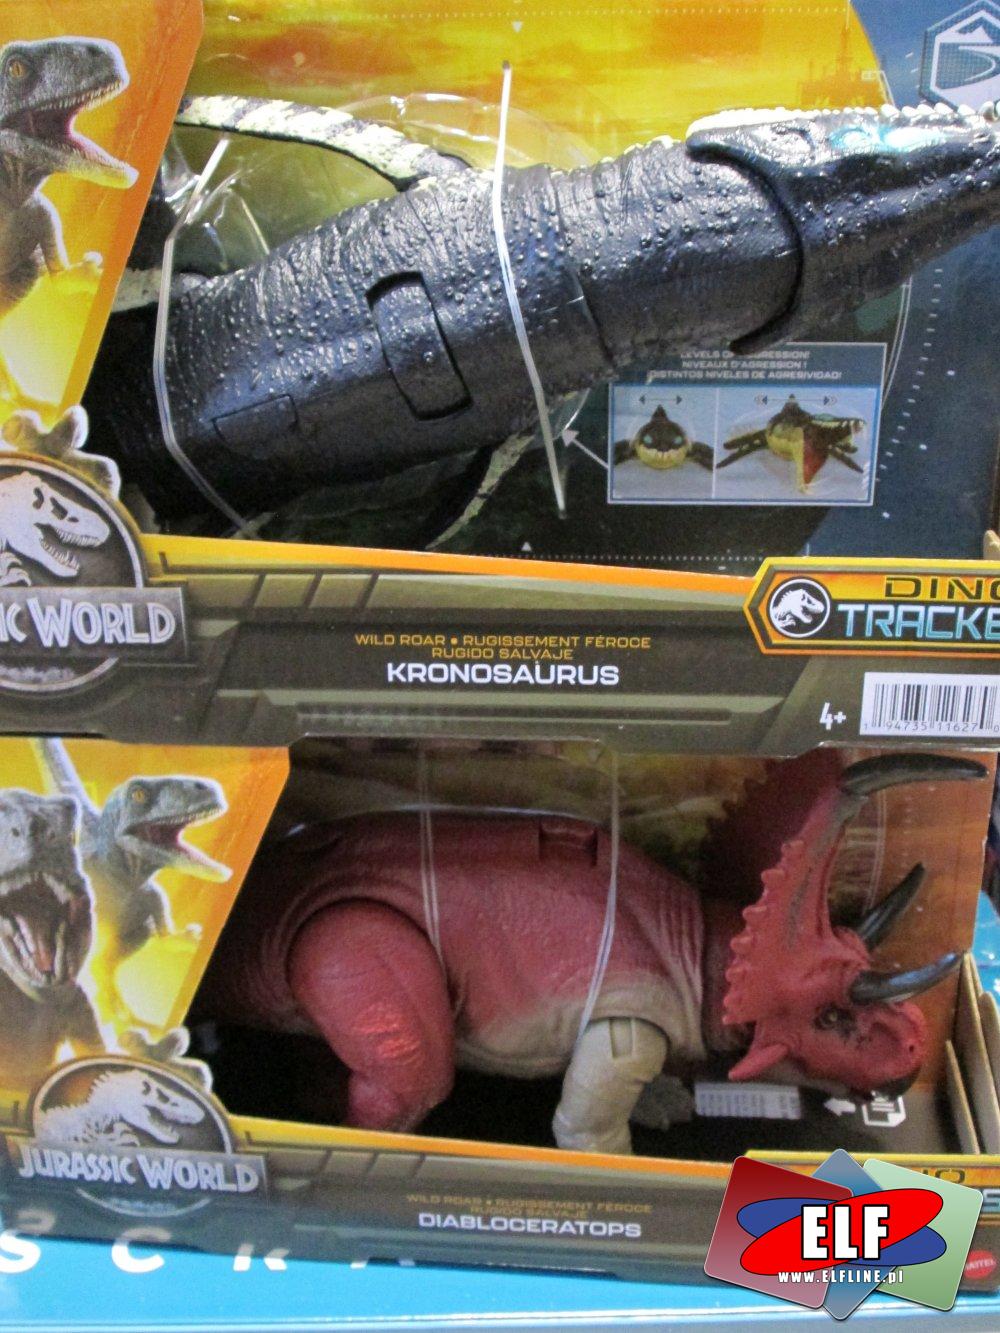 Jurassic World, Dinozaury, Dono Trackers, Diabloceratops, Kronosaurus, Eocarcharia, Dryptosaurus i inne dinozaury, figurki, zabawki